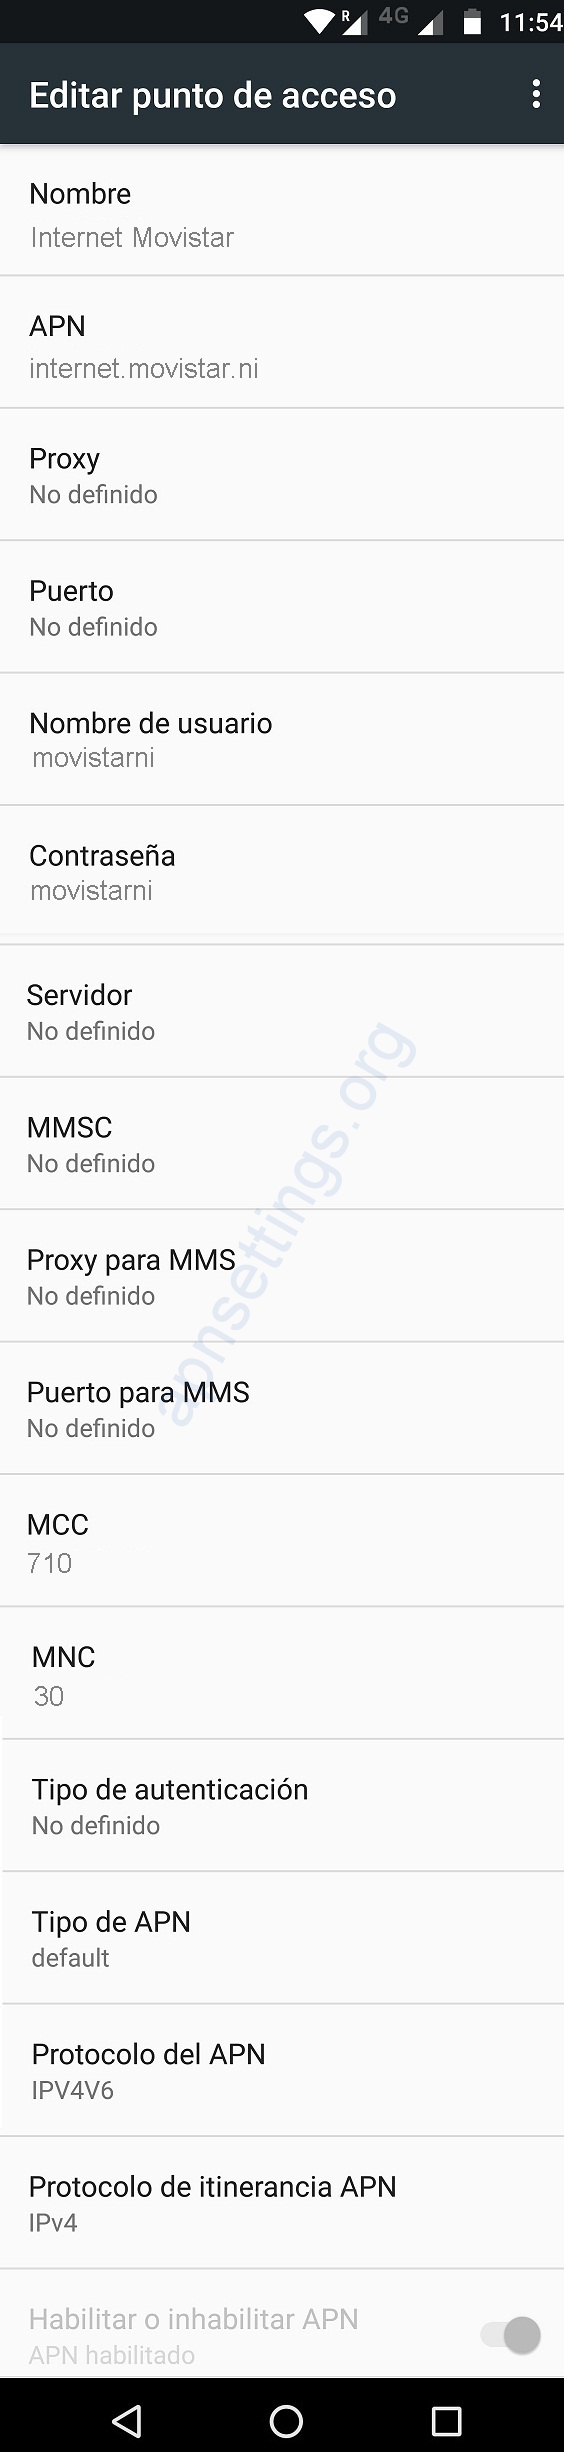 APN de Movistar Nicaragua 4G LTE para Android